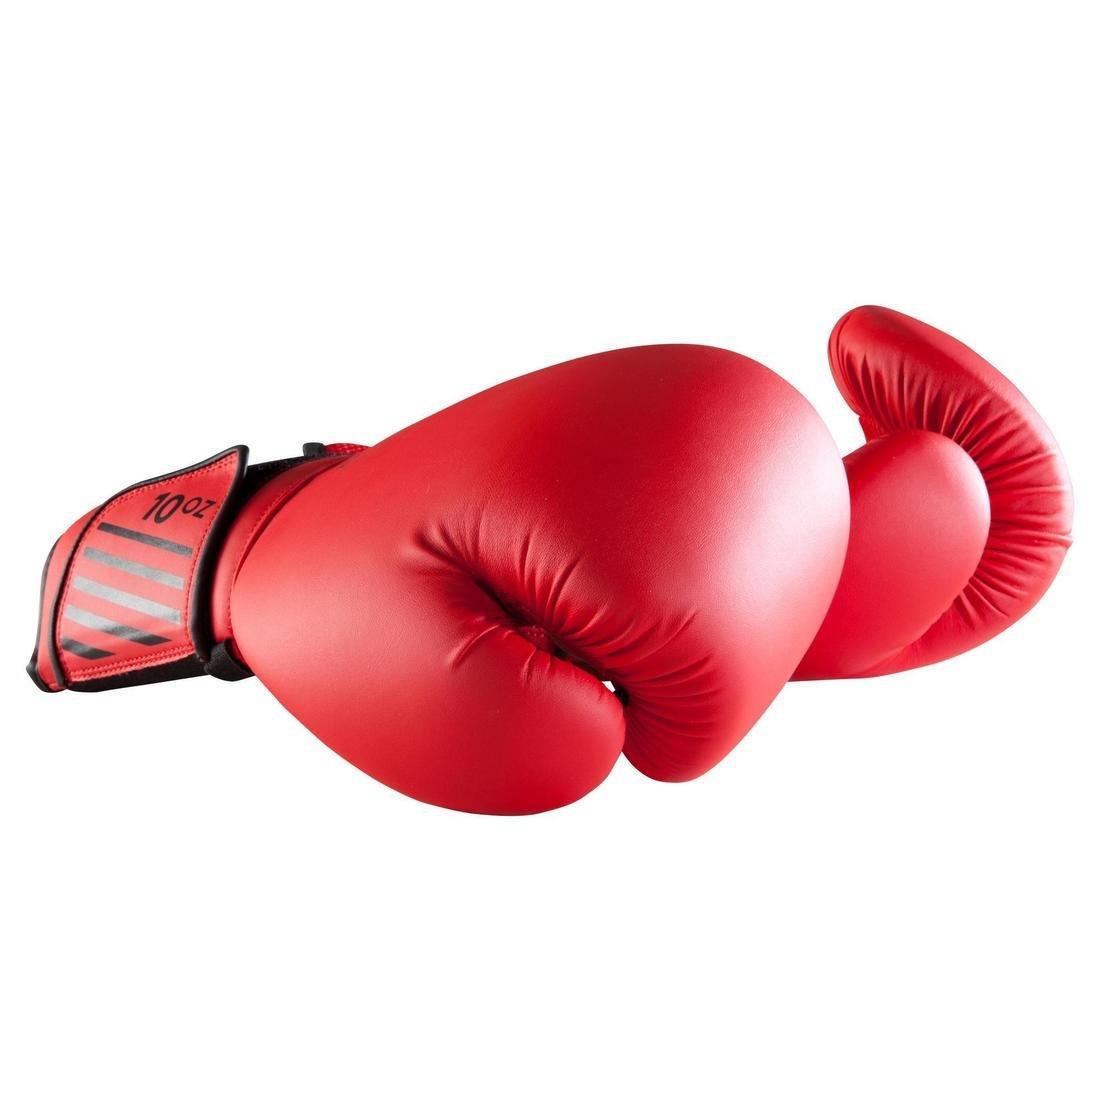 OUTSHOCK - Unisex Beginner Boxing Gloves - 100, Cherry Red